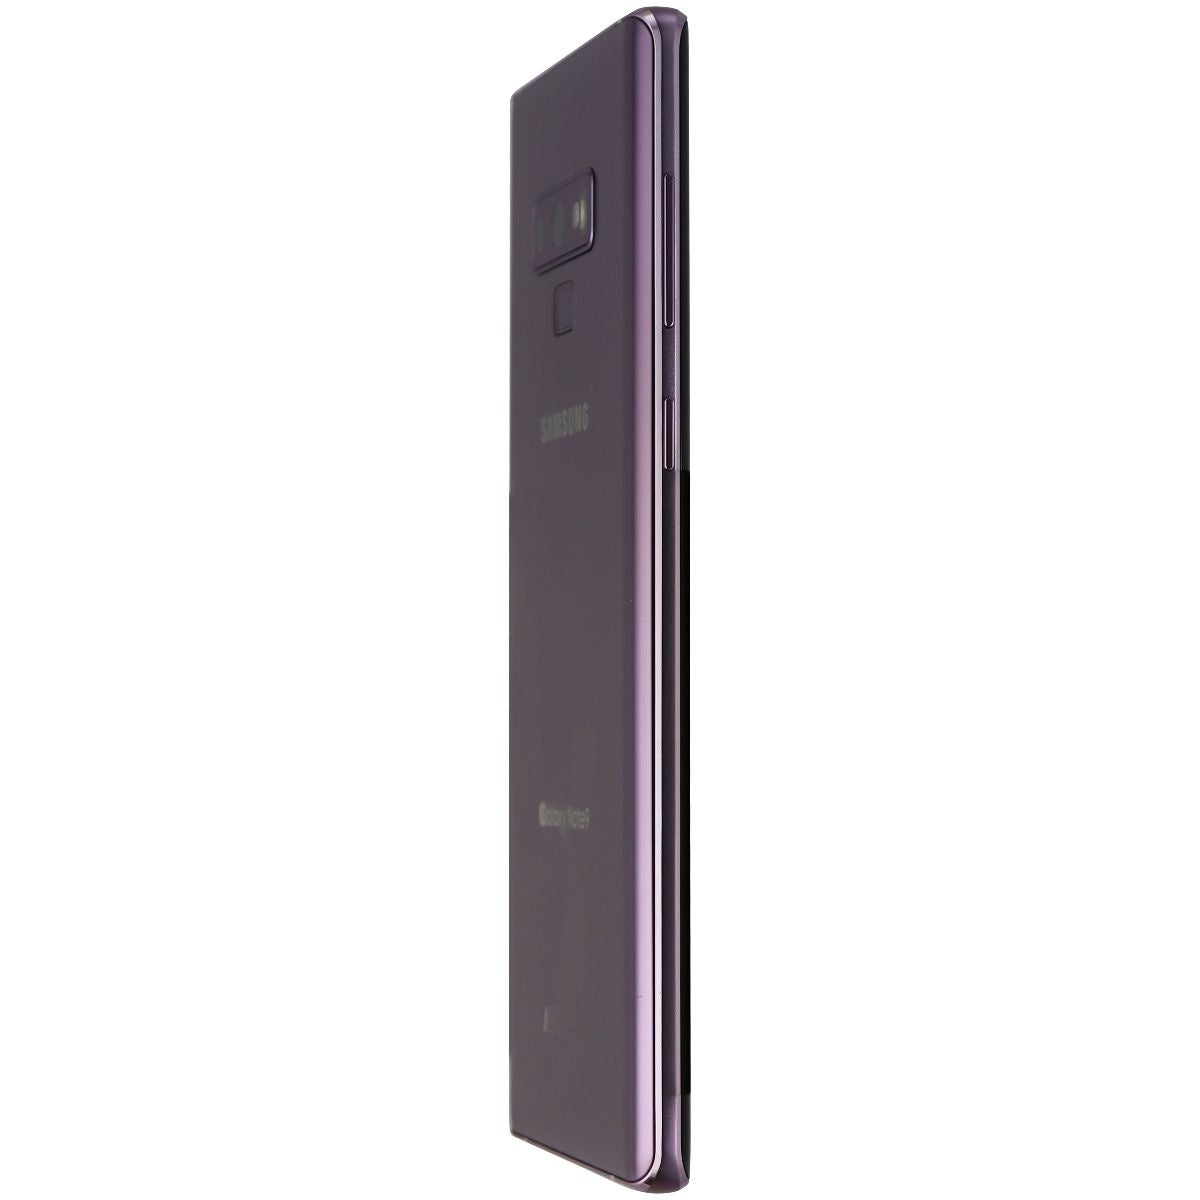 Samsung Galaxy Note9 (6.4-in) (SM-N960U1) UNLOCKED - 128GB / Lavender Purple Cell Phones & Smartphones Samsung    - Simple Cell Bulk Wholesale Pricing - USA Seller